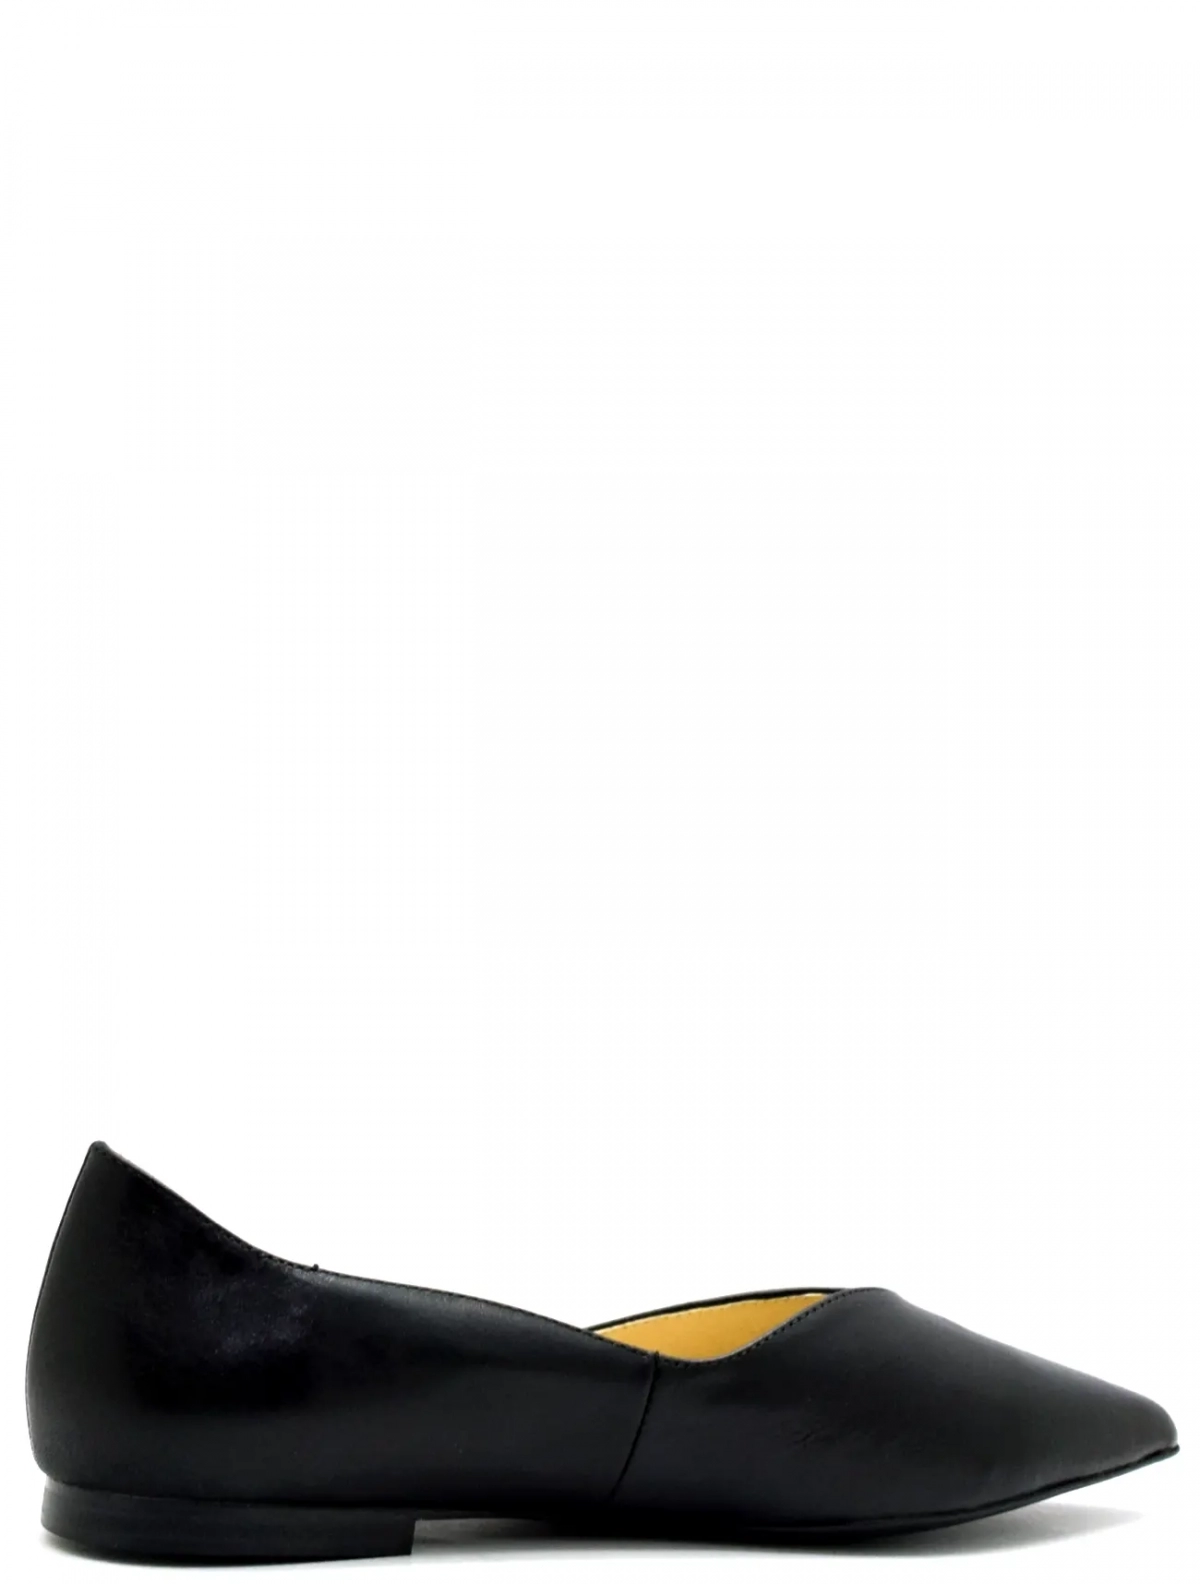 Caprice 9-22110-28-022 женские туфли